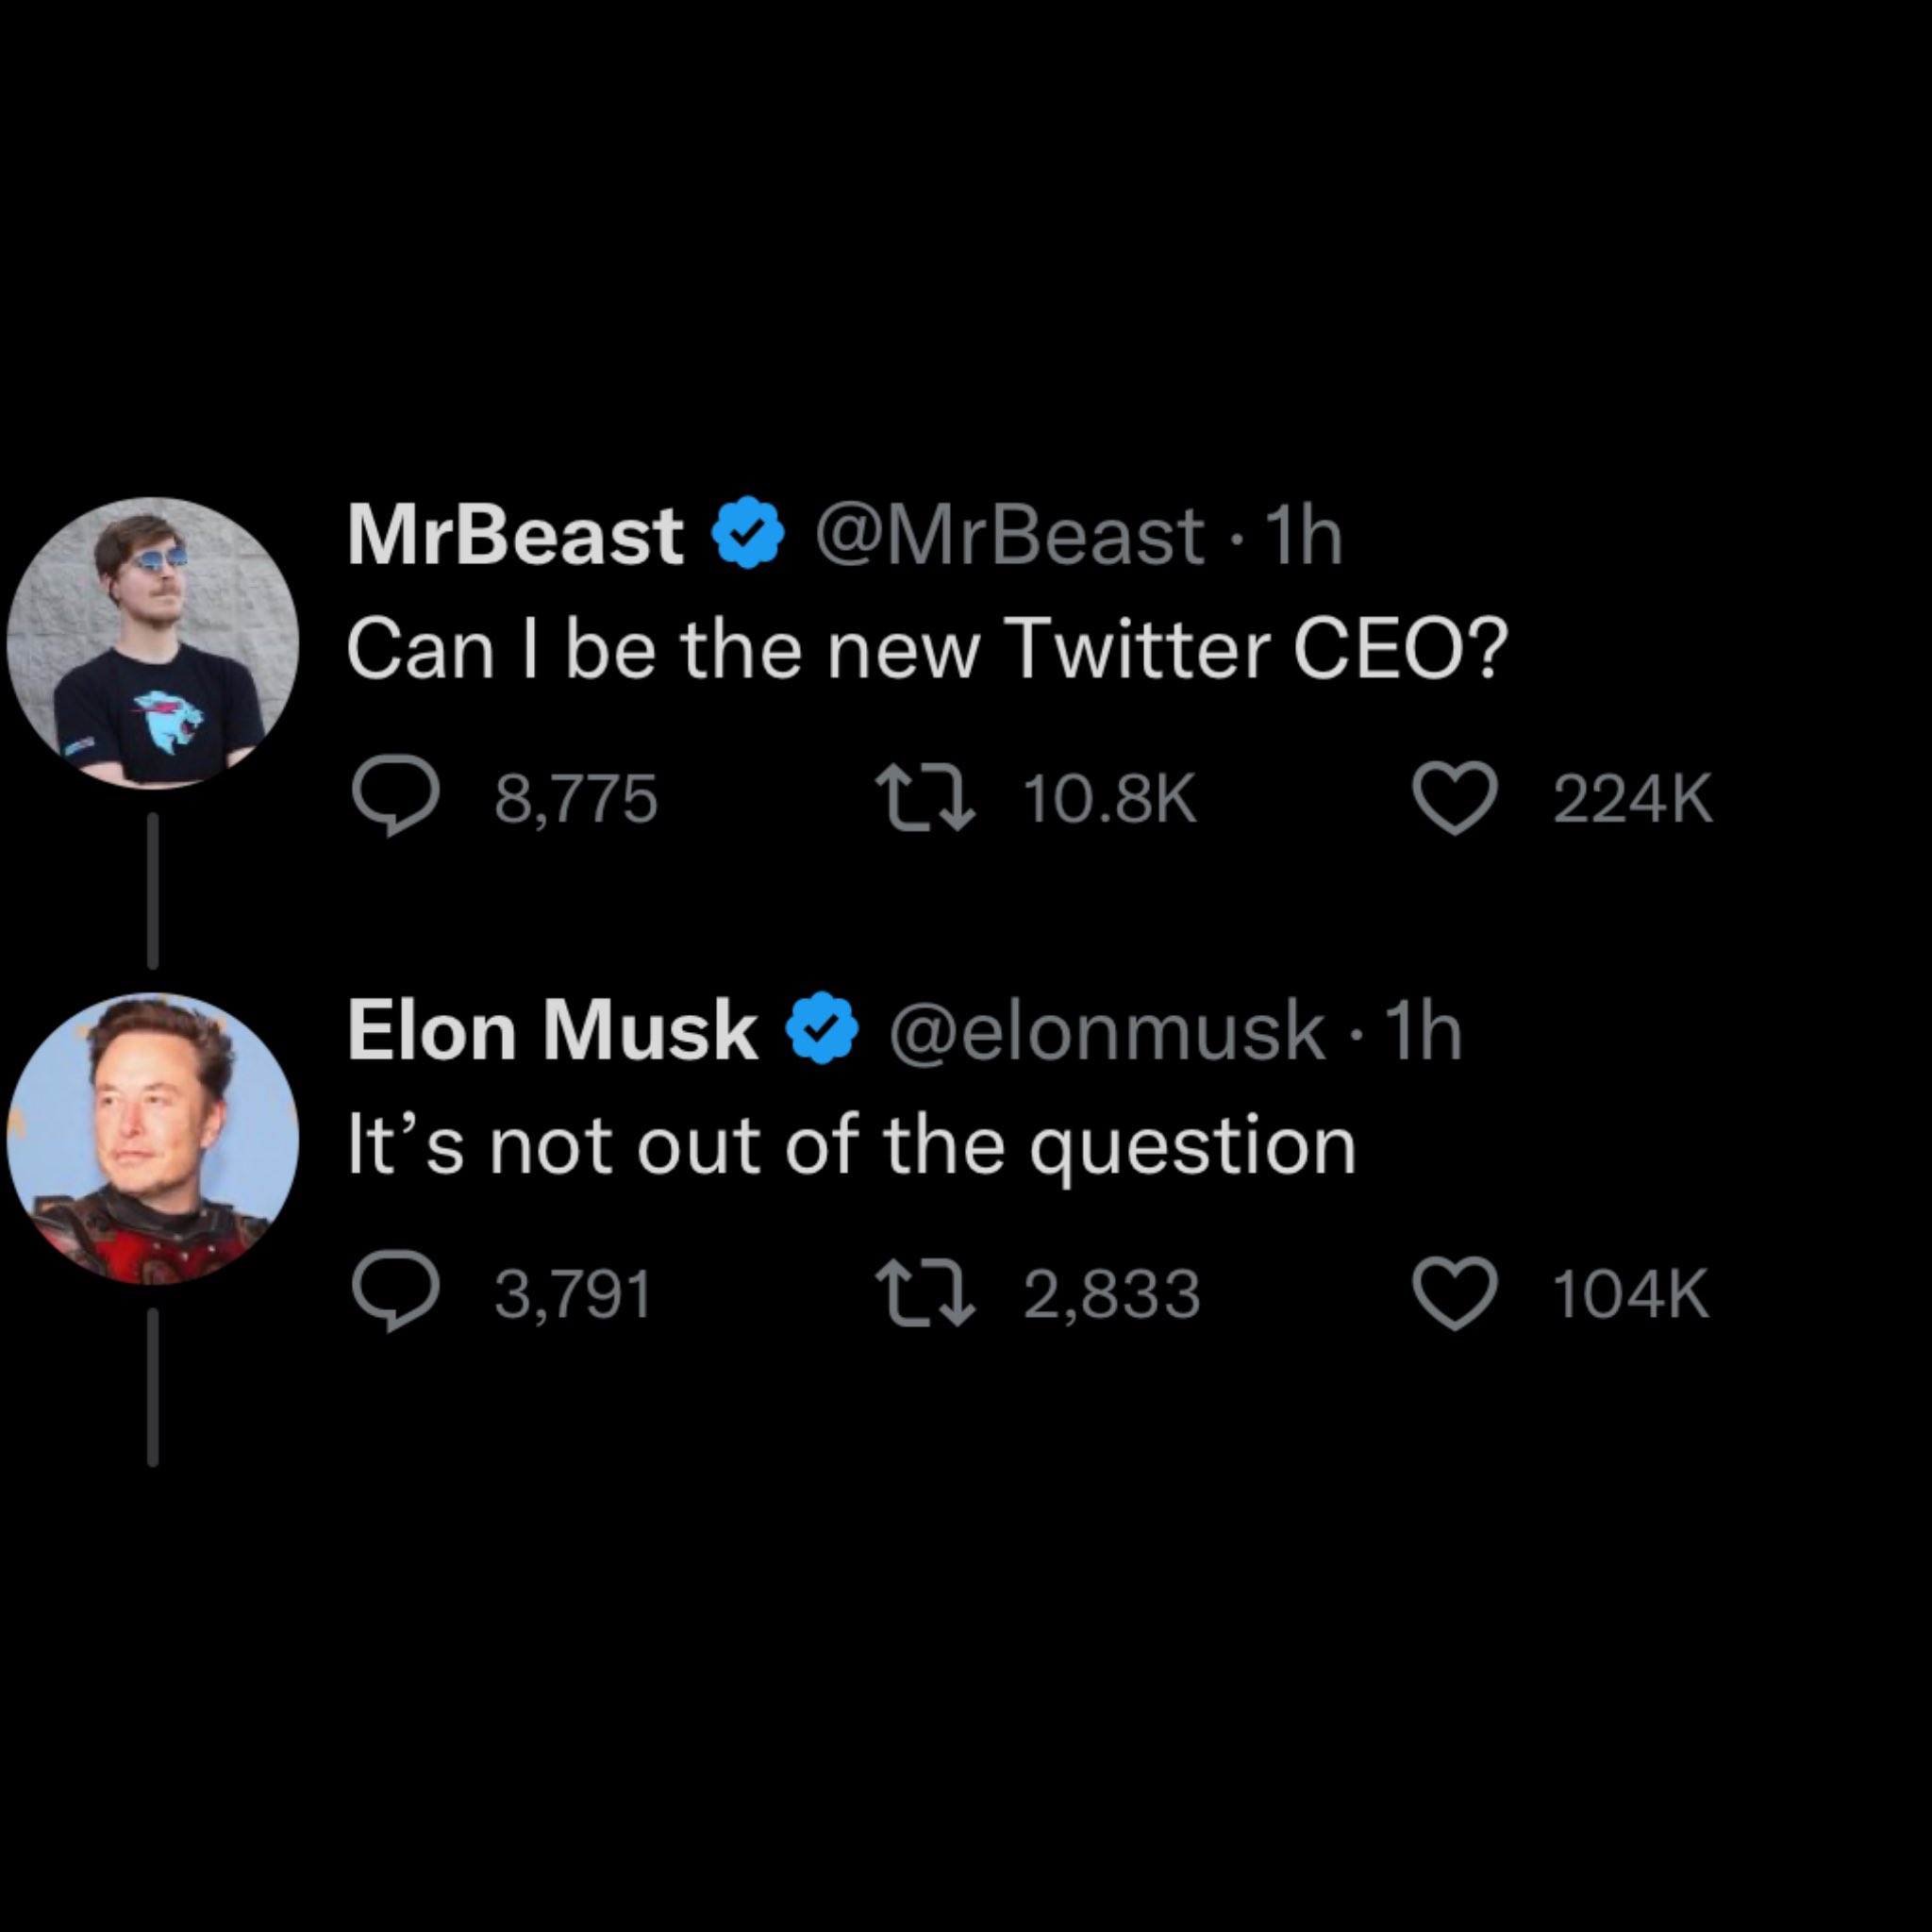 MrBeast Twitter CEO: World's Most Popular r Asks If He Can Be  Twitter CEO. Elon Musk Responds